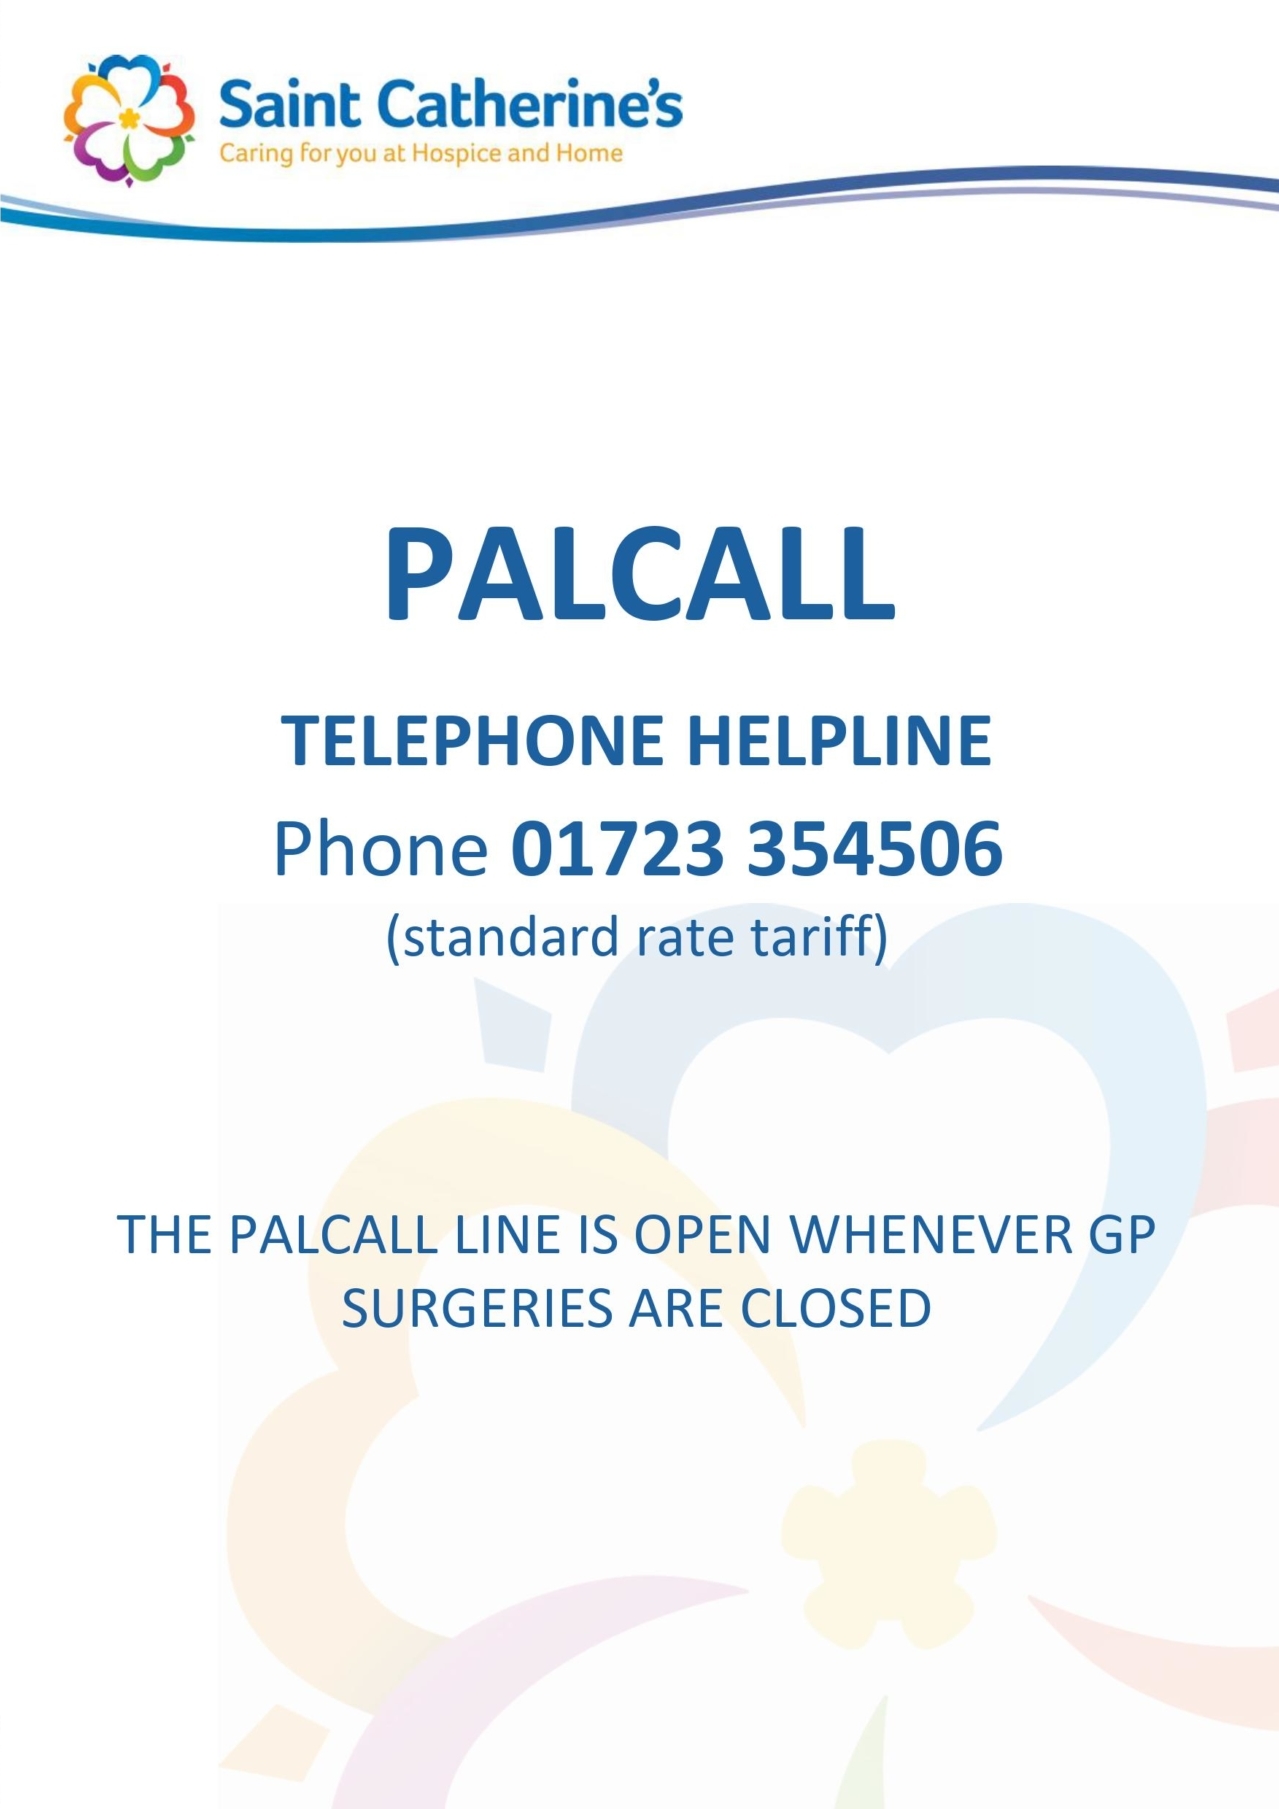 Palcall Info Leaflet